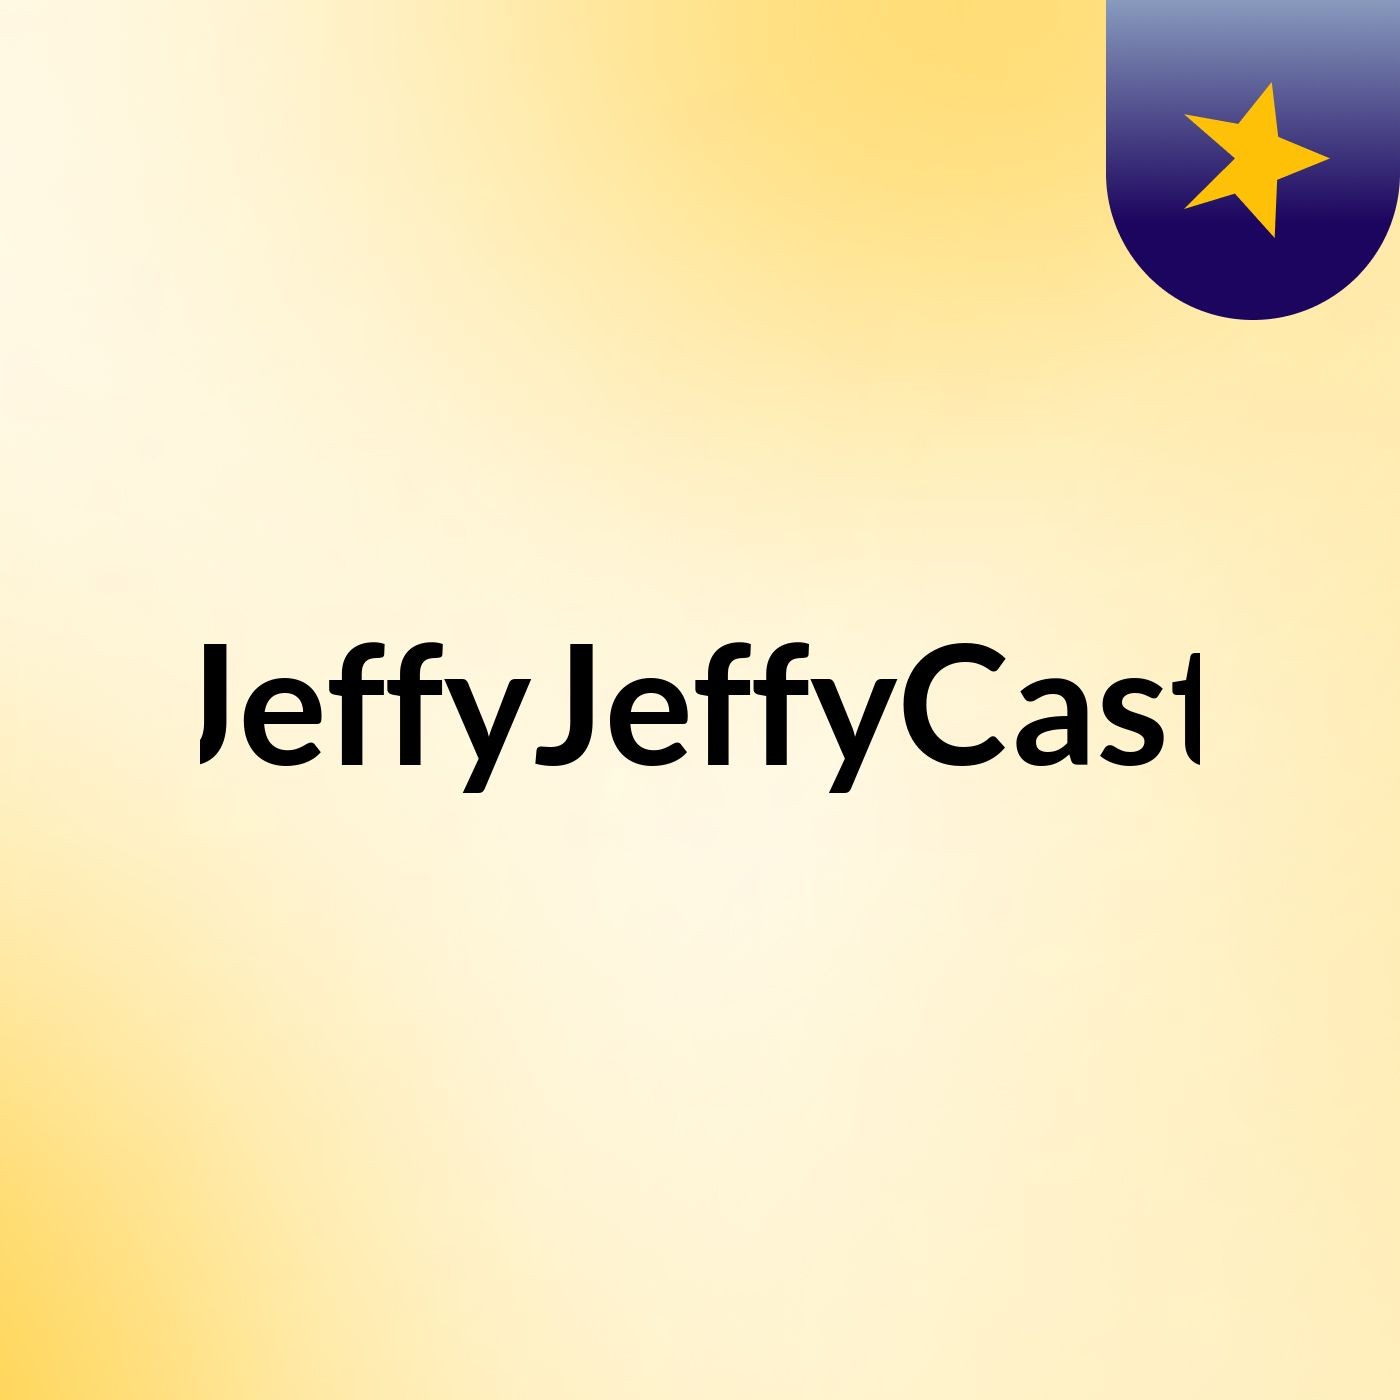 JeffyJeffyCast